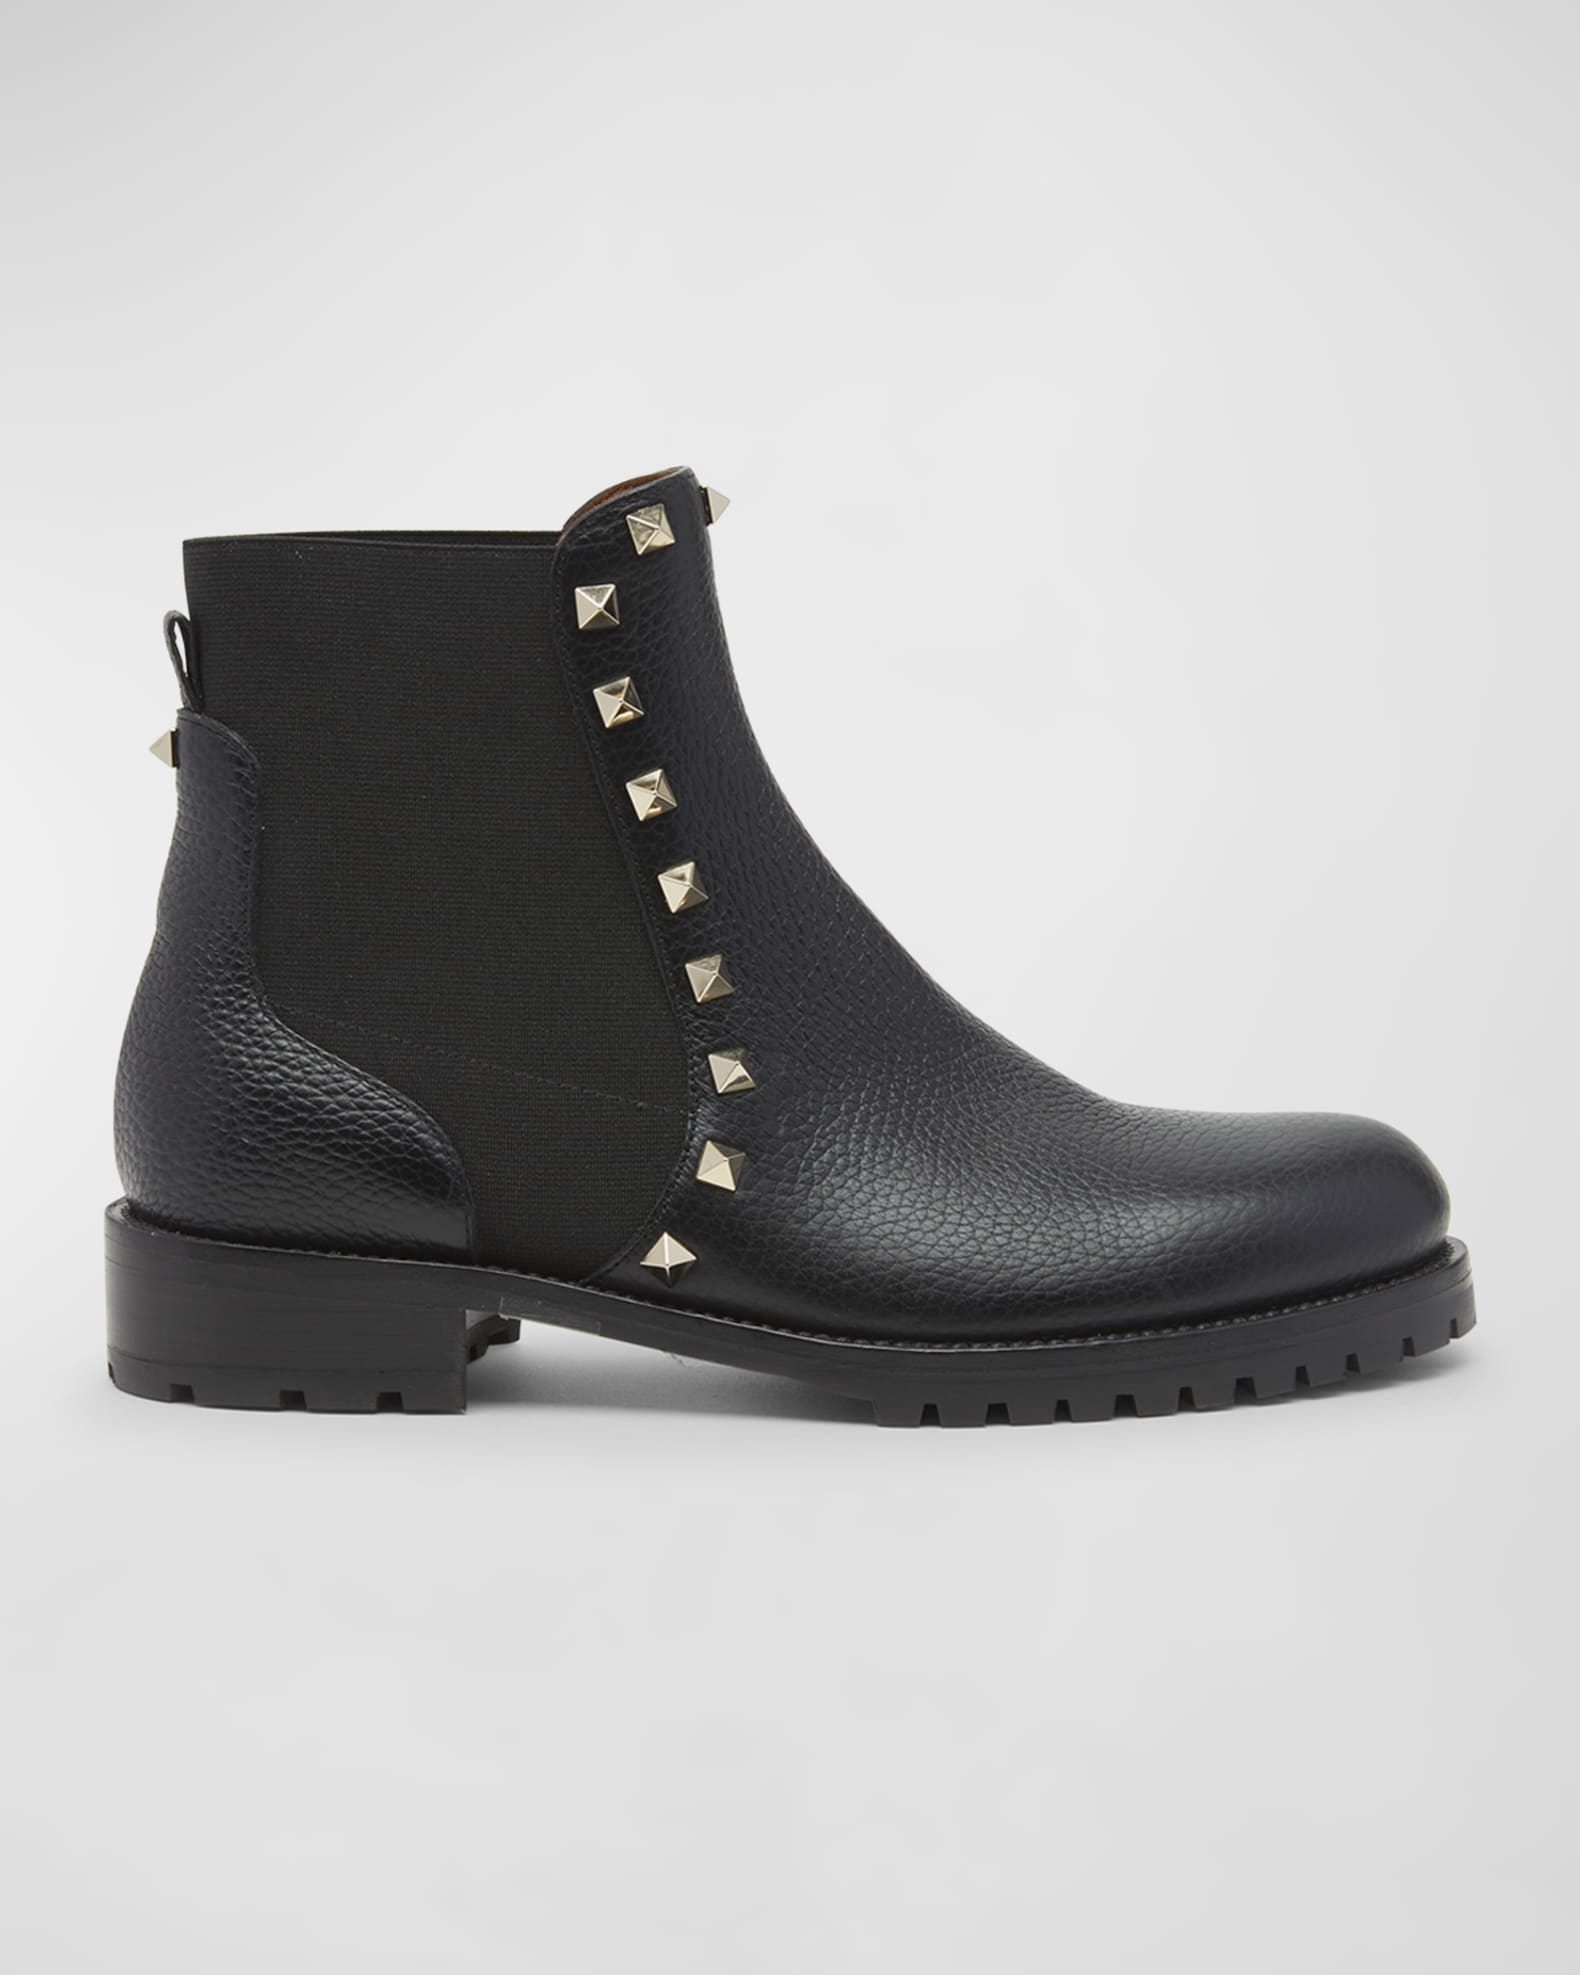 Louis Vuitton Illusion Ankle Boot BLACK. Size 38.0